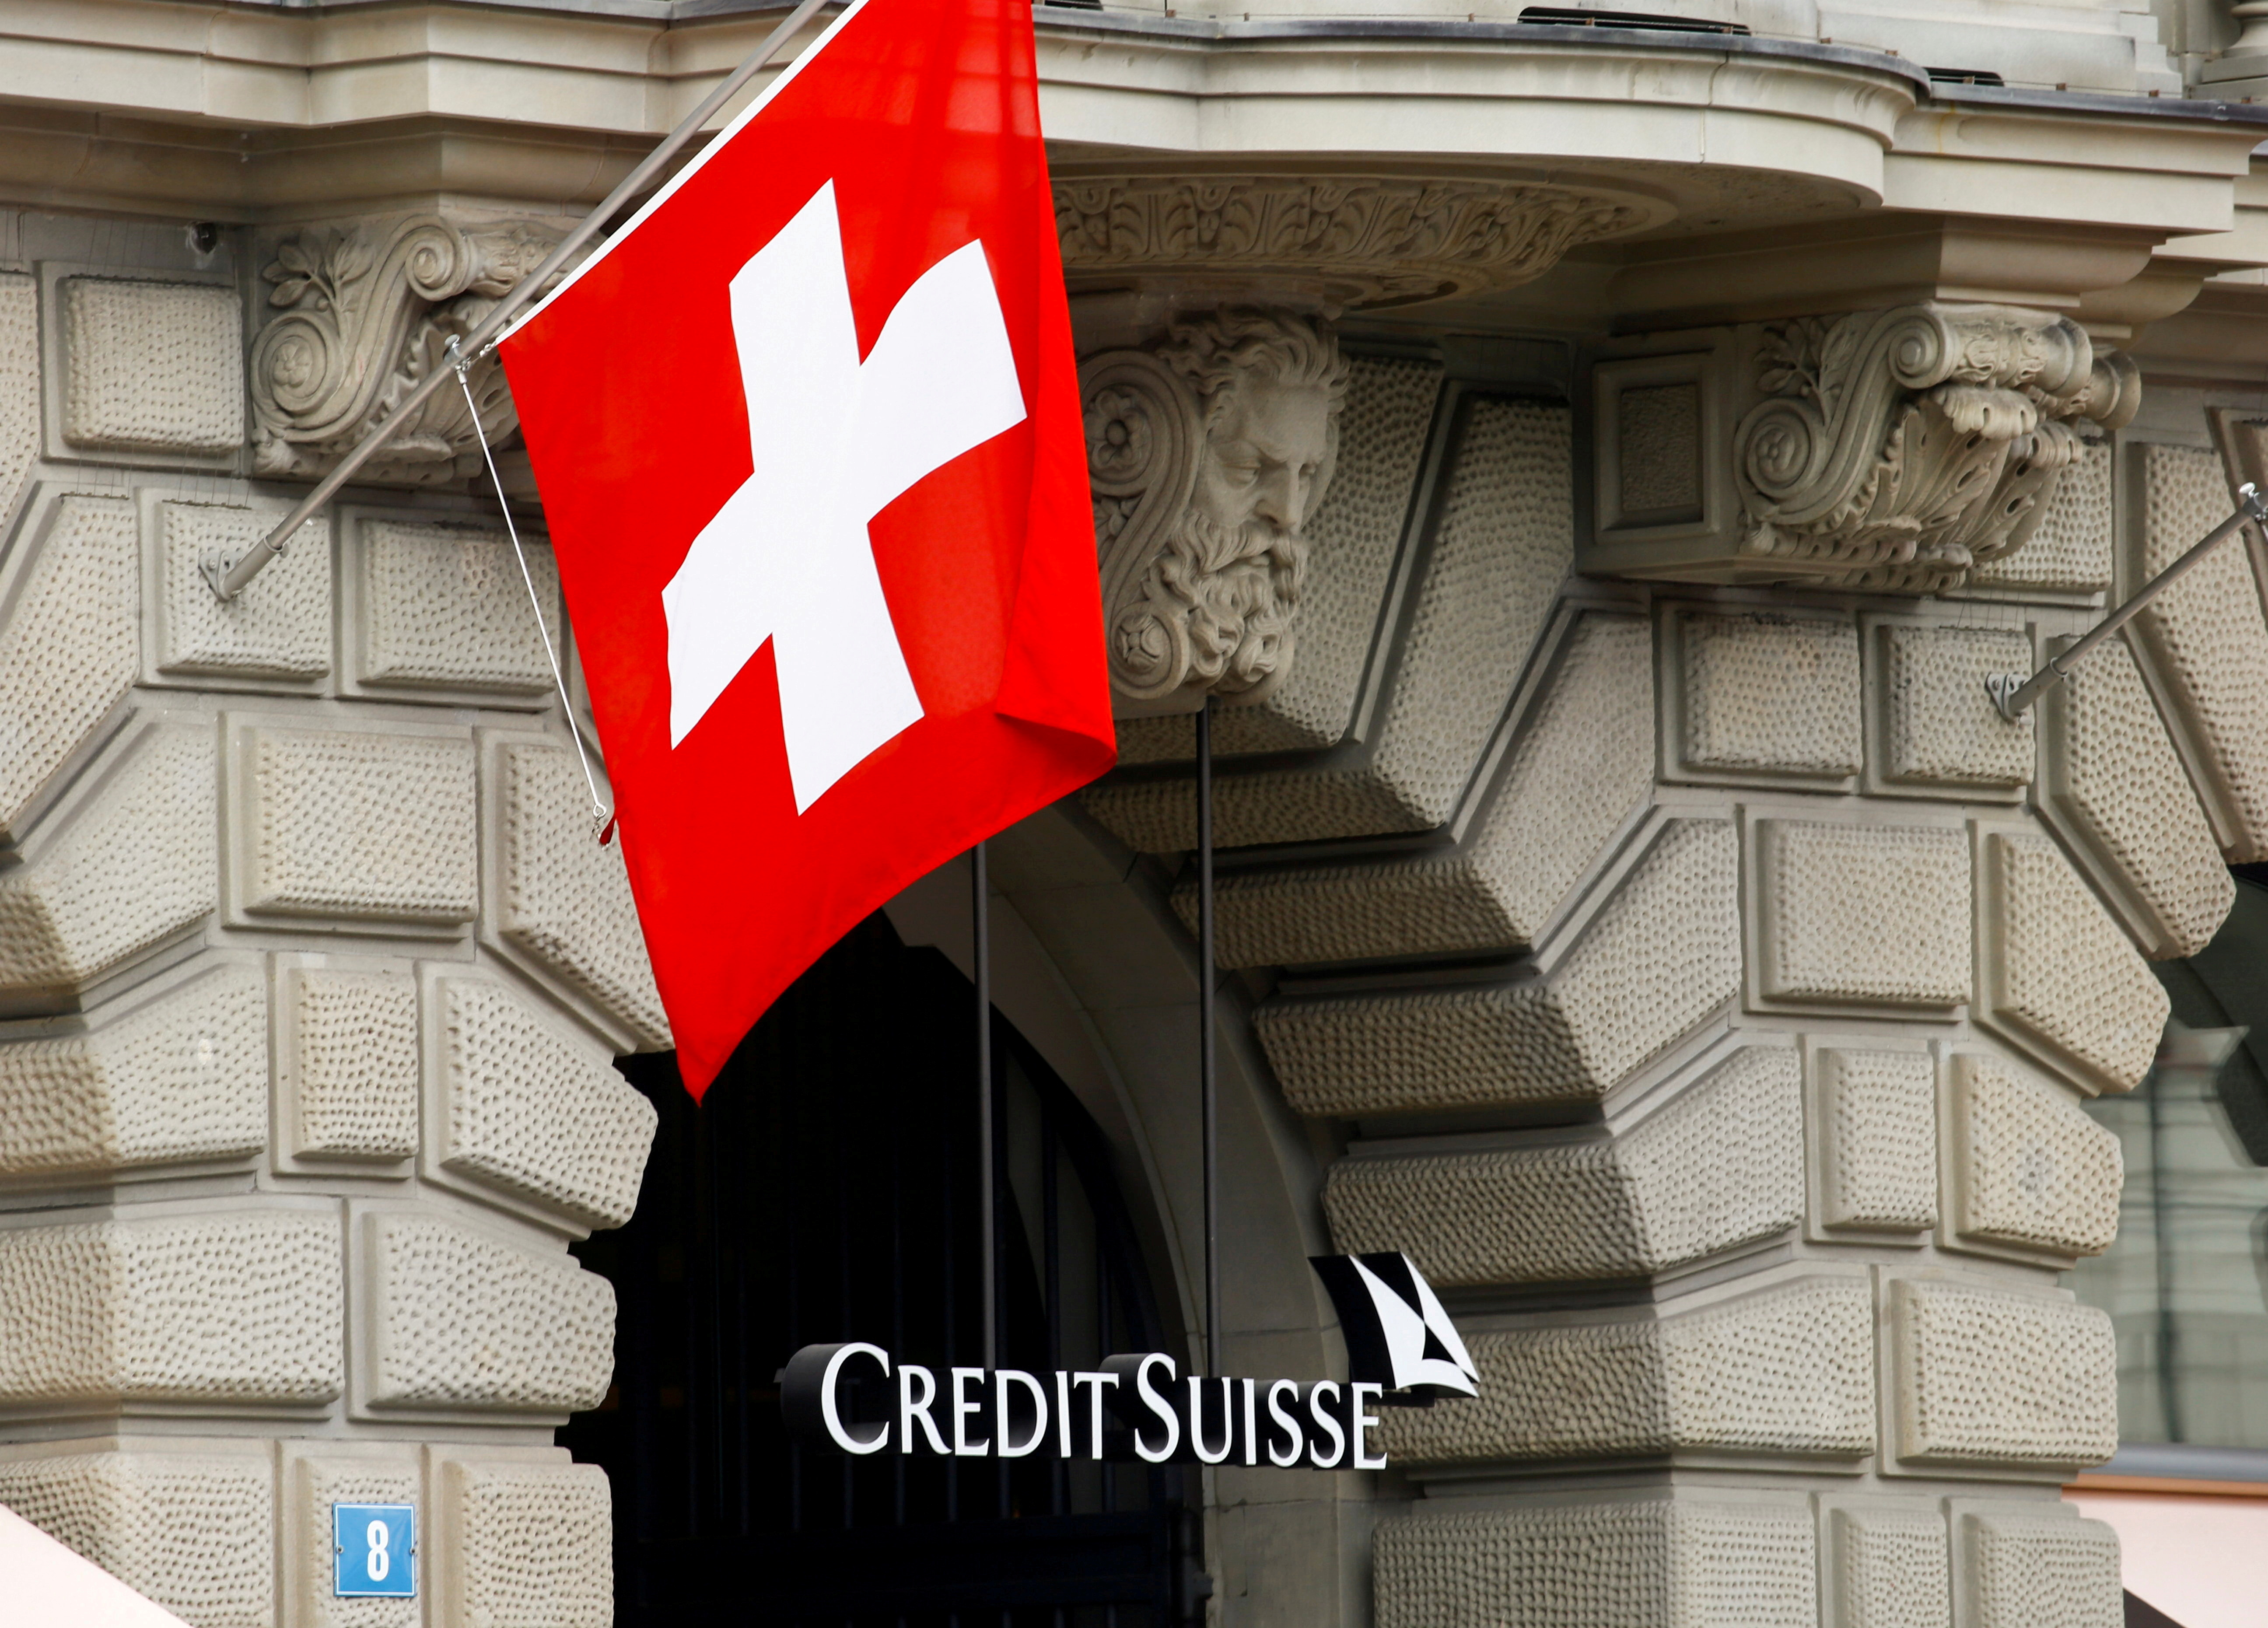 Switzerland's national flag flies above the logo of Swiss bank Credit Suisse at its headquarters in Zurich, Switzerland April 18, 2021. REUTERS/Arnd Wiegmann/File Photo